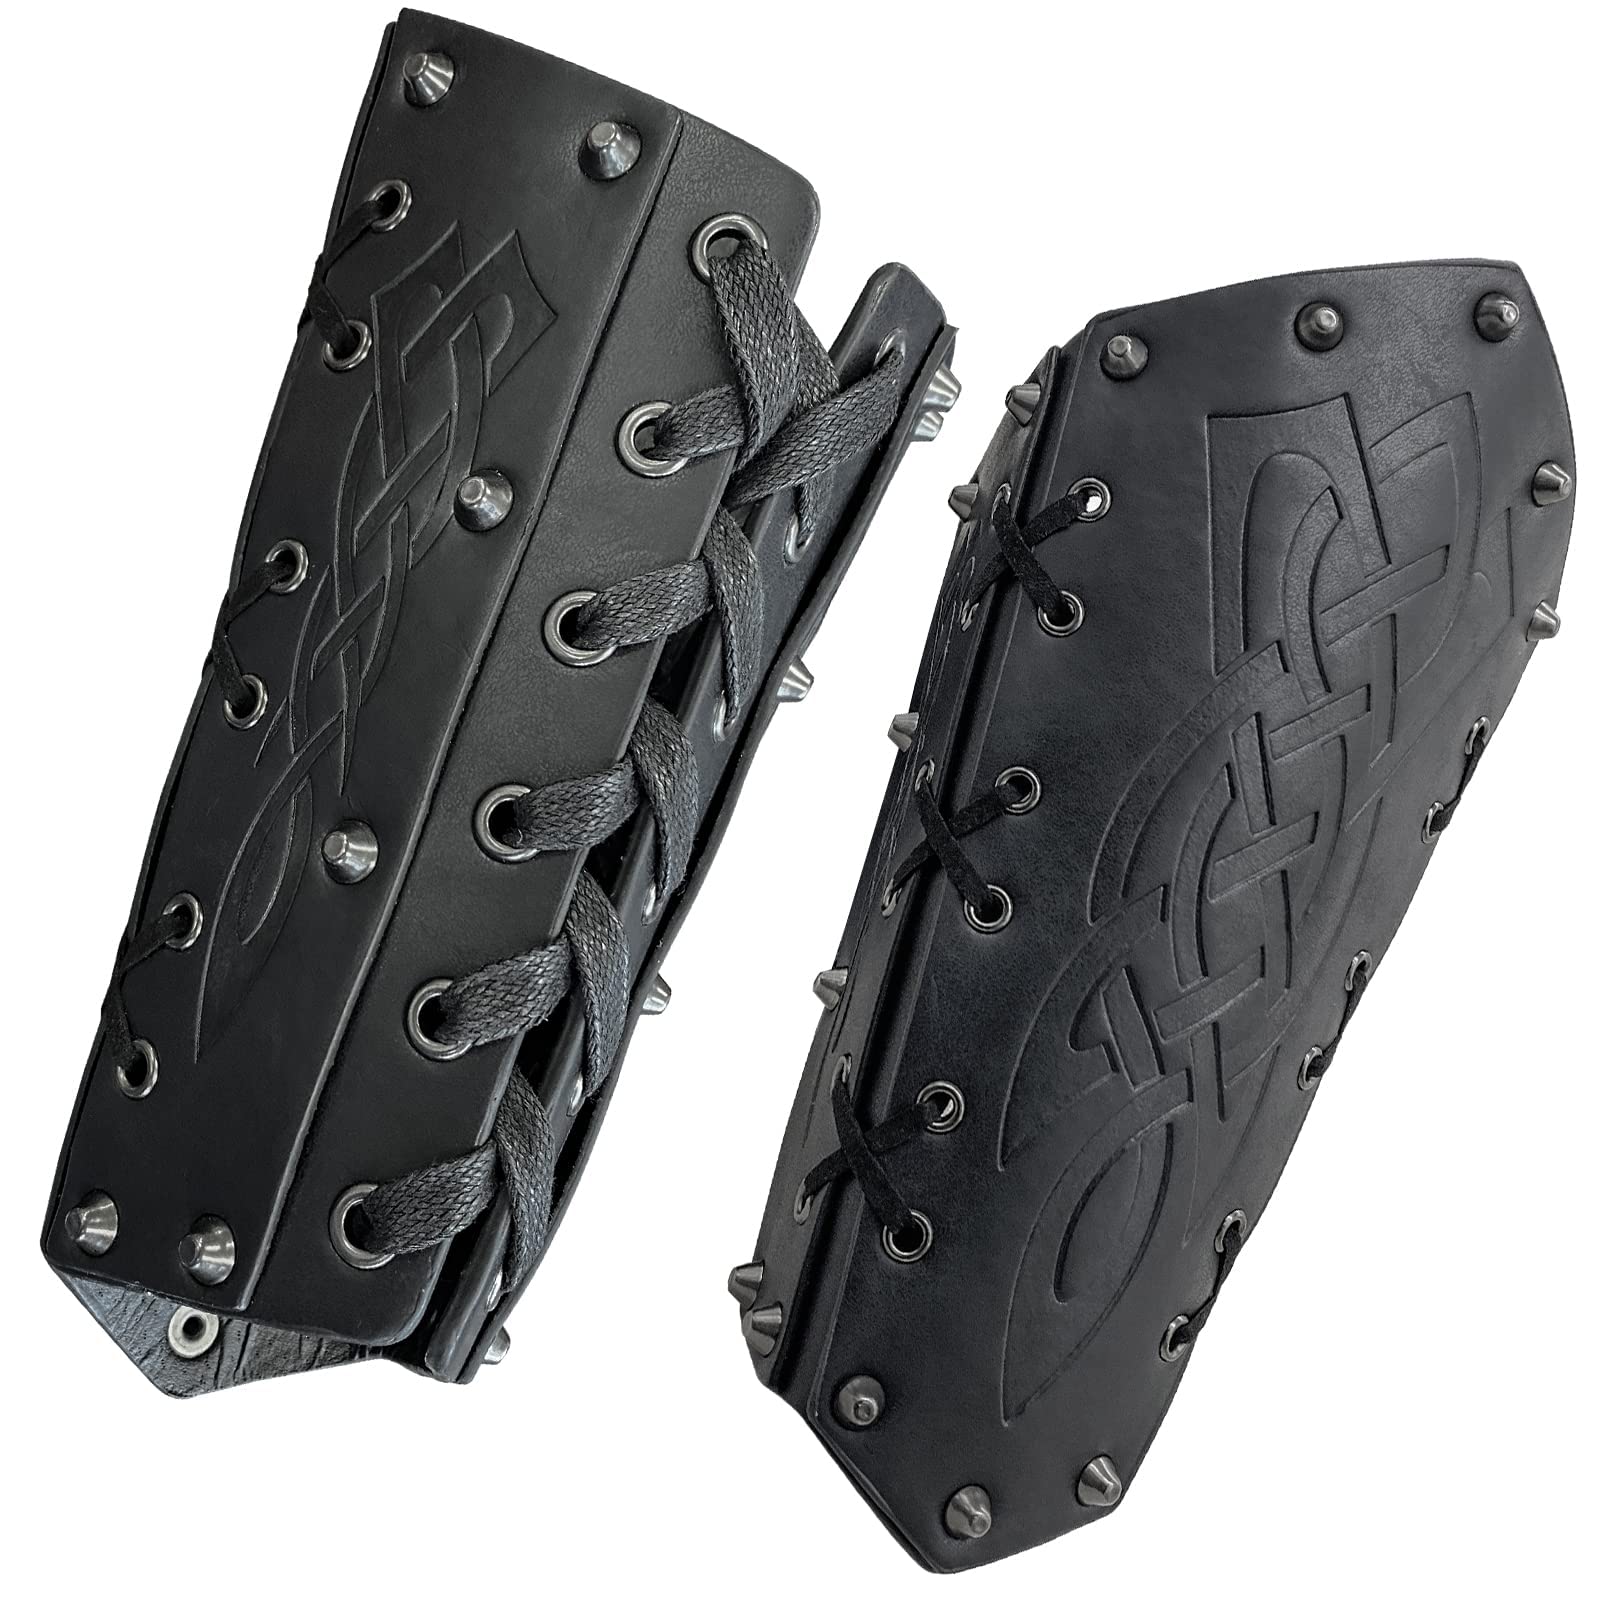 Leather Bracer Arm Cuff Armor Medieval Vambrace - vikingshields